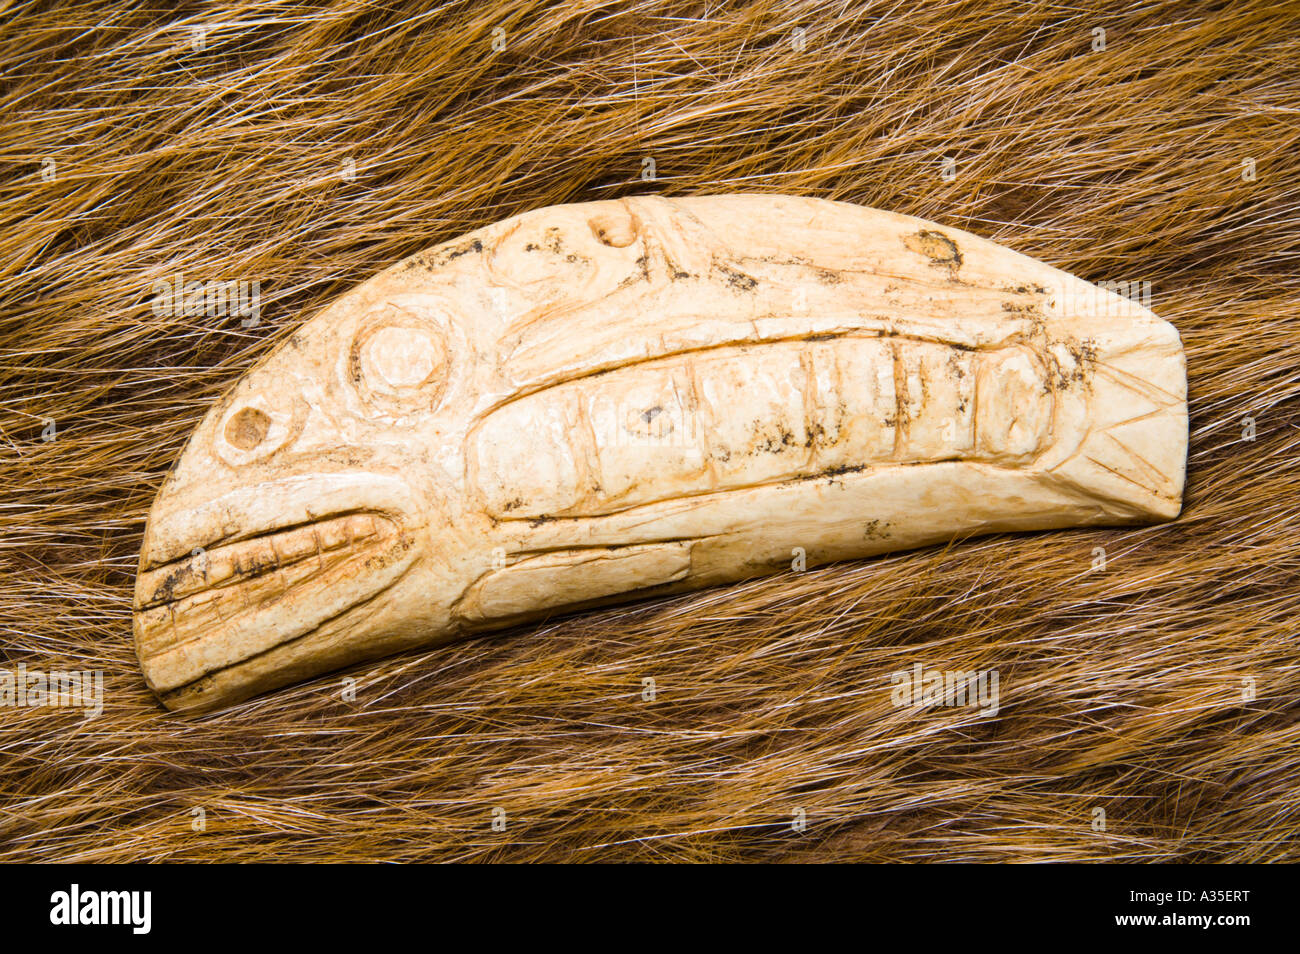 pacific northwest native american carved bone fish Stock Photo